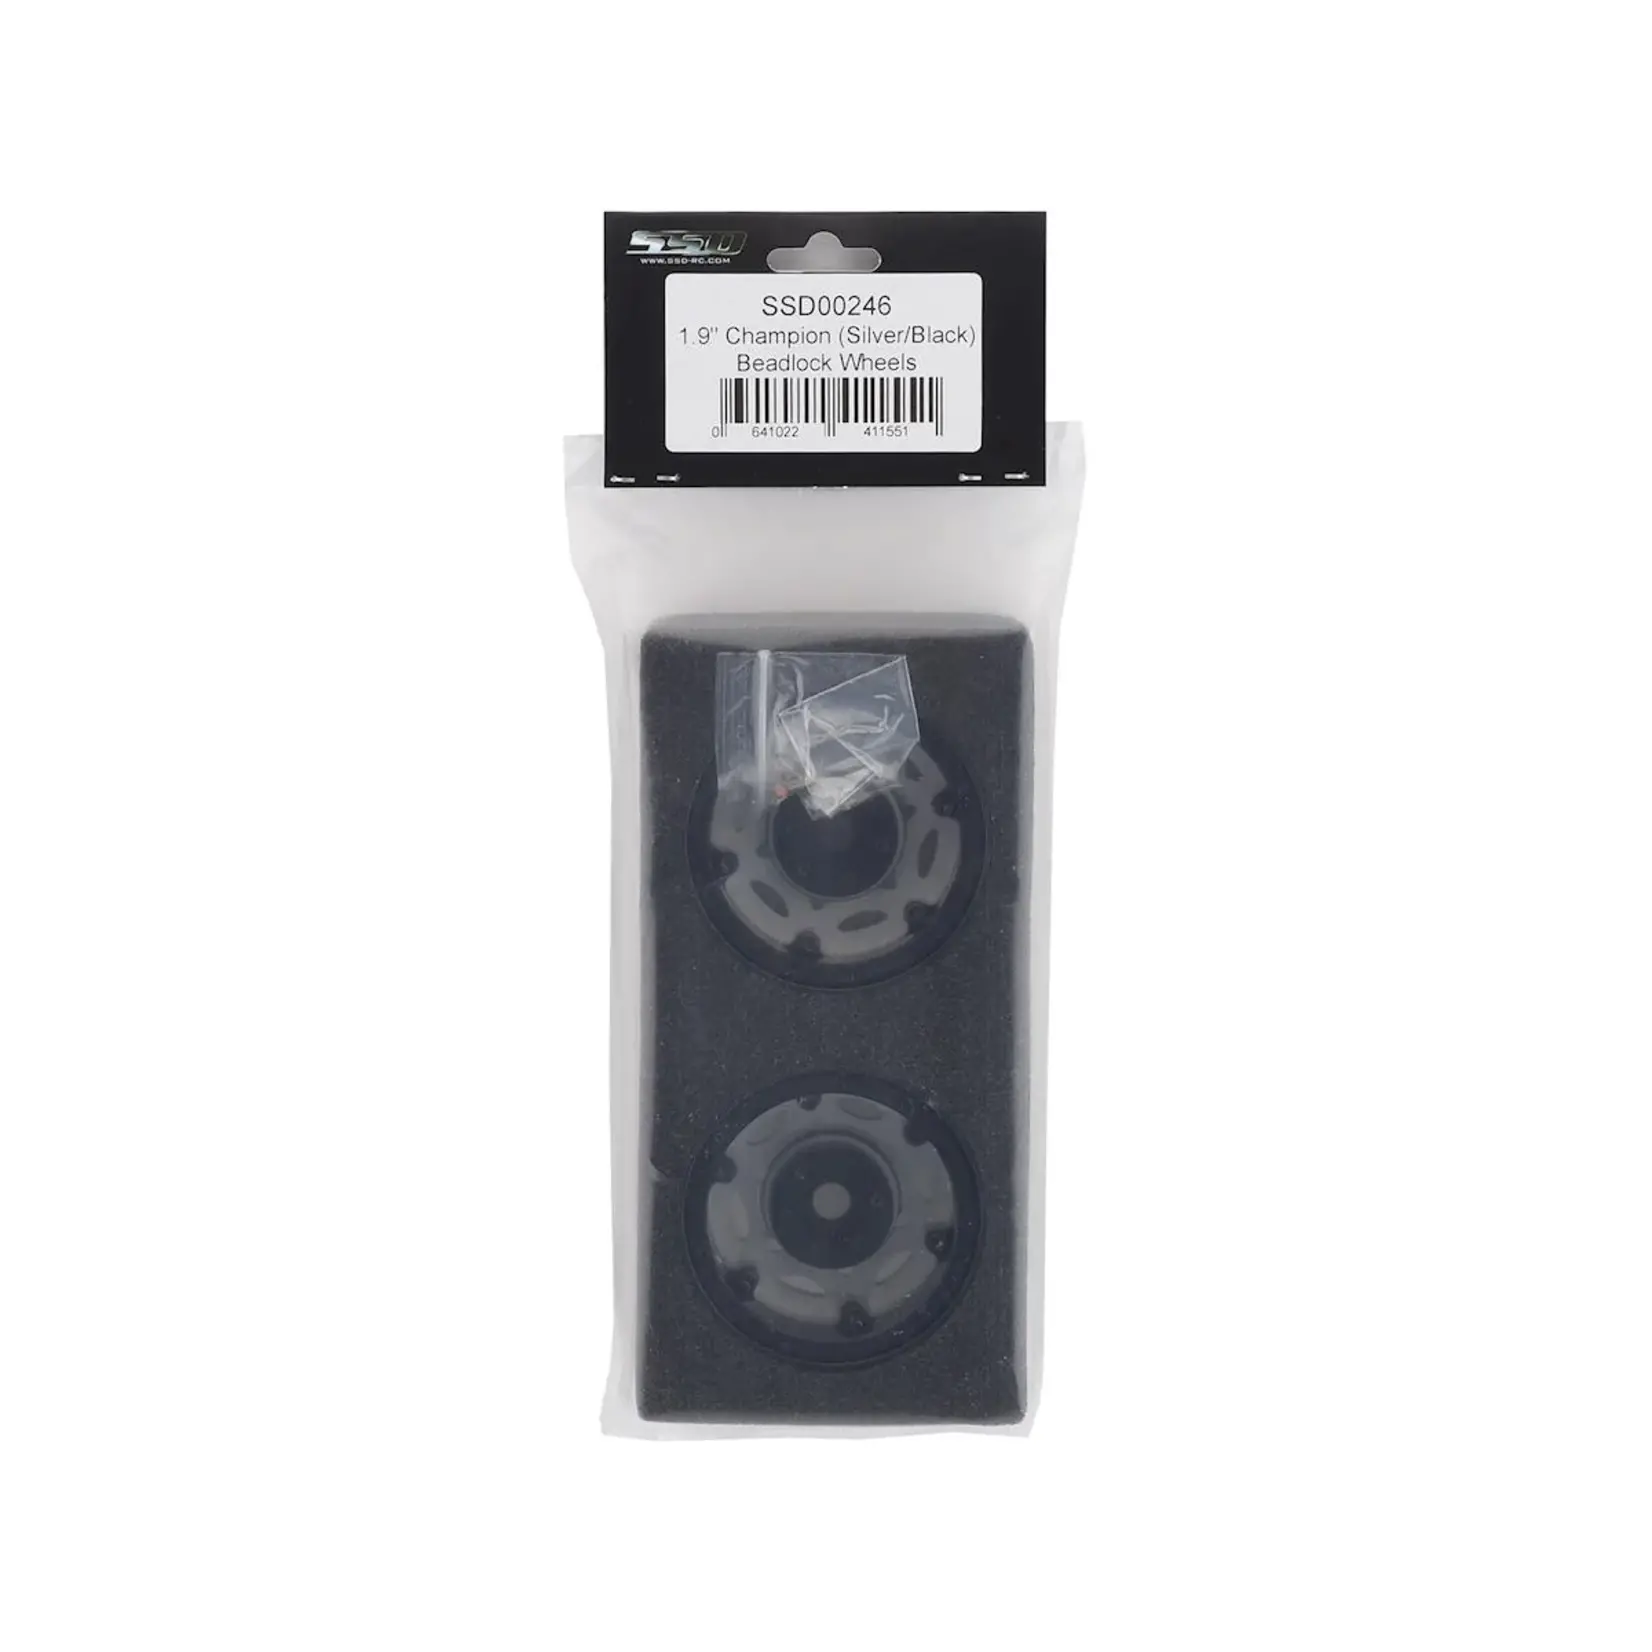 SSD RC SSD RC 1.9” Champion Beadlock Wheels (Silver/Black) #SSD00246